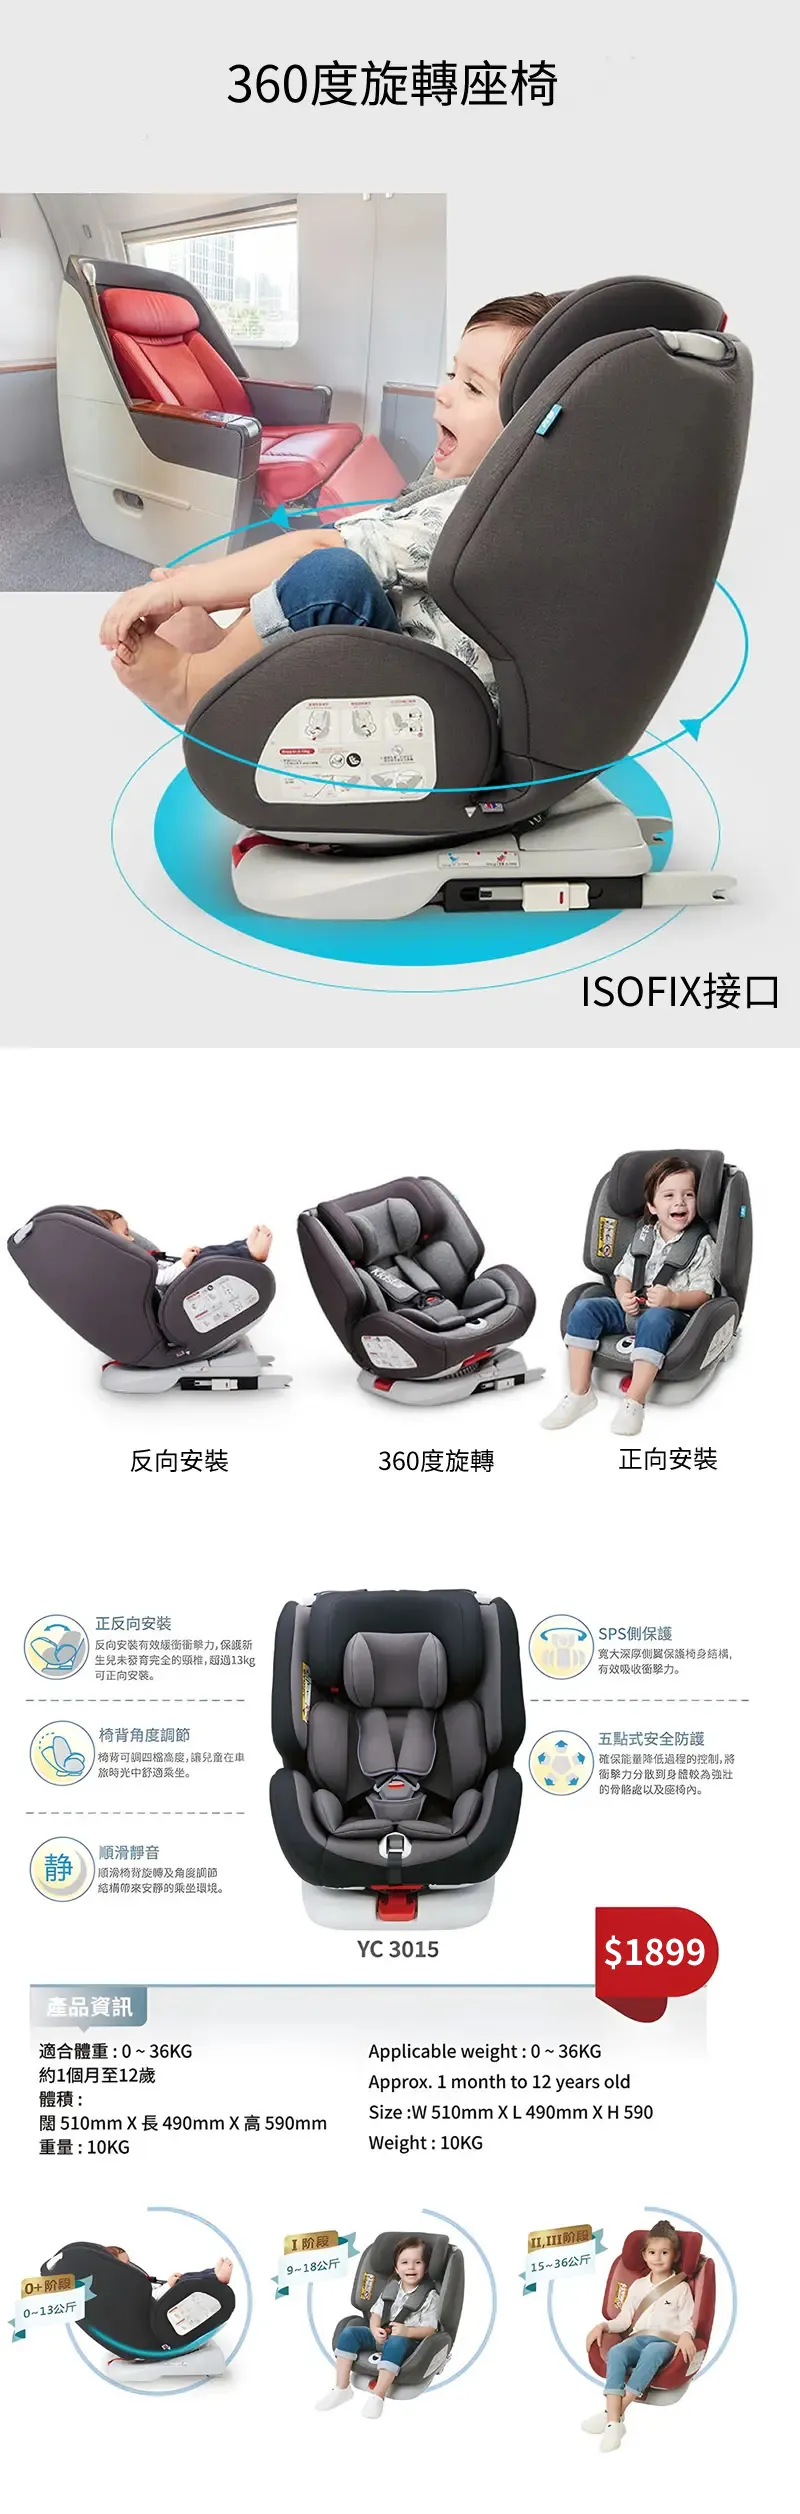 Minimoto 360转盘汽车座椅(ISO-FIX)